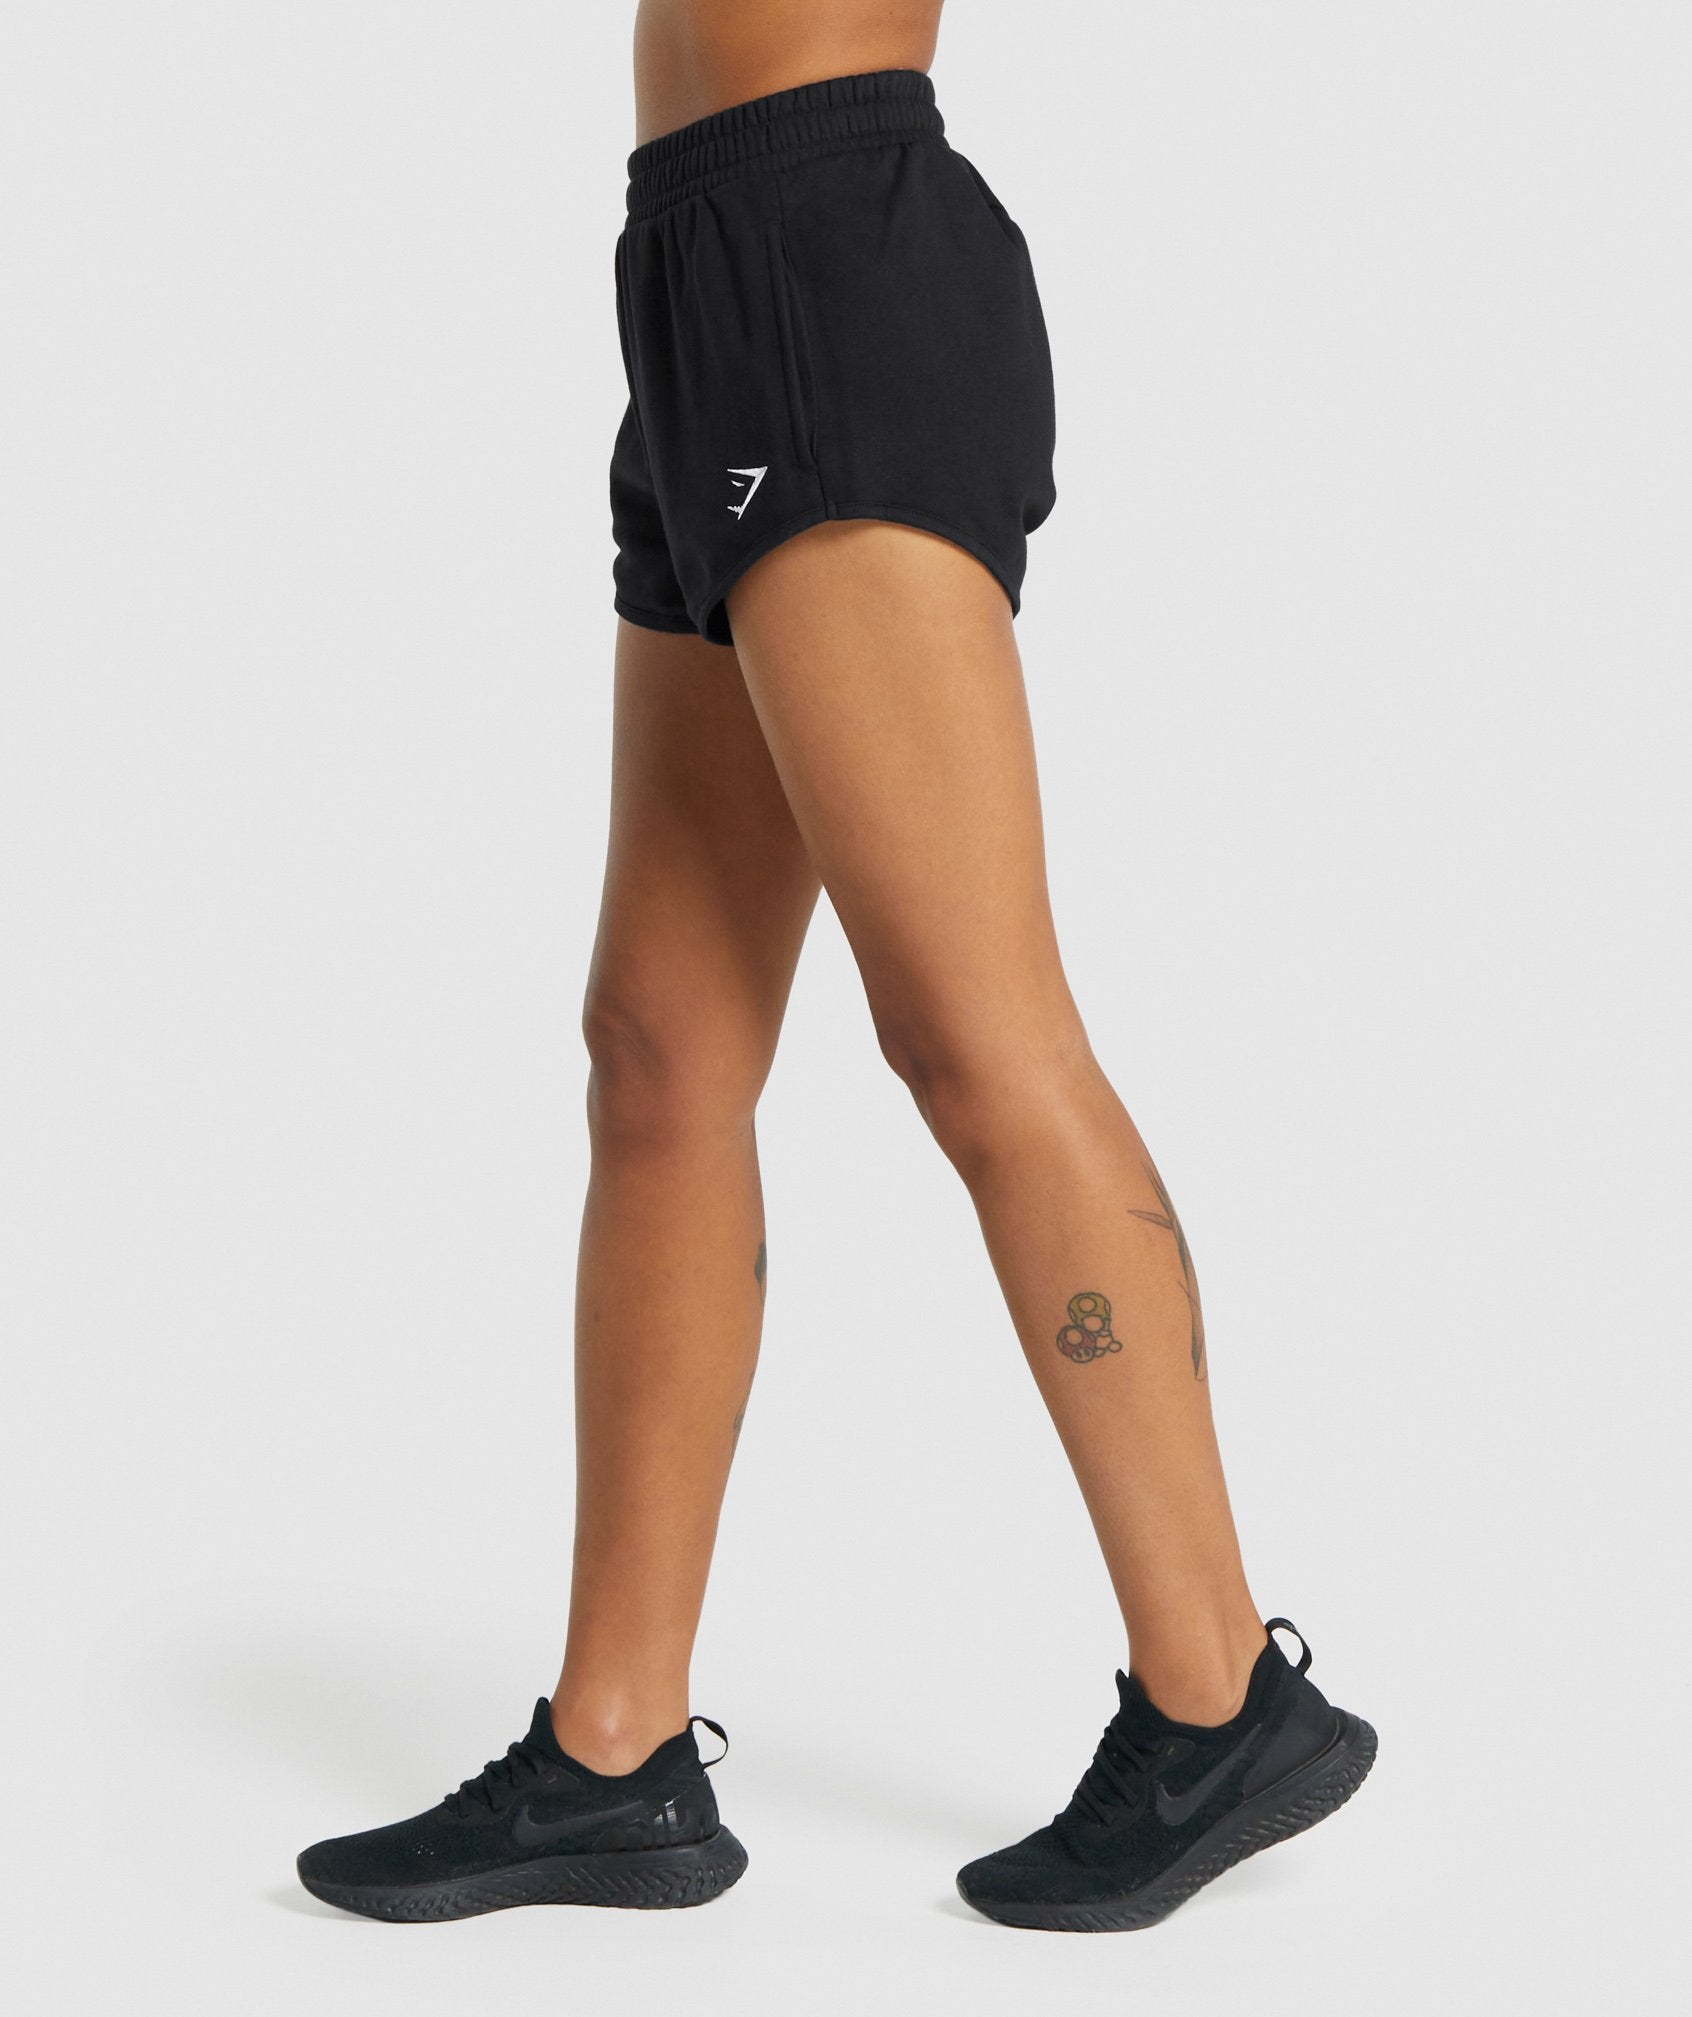 Shorts gymshark mujer — Ropafitgt